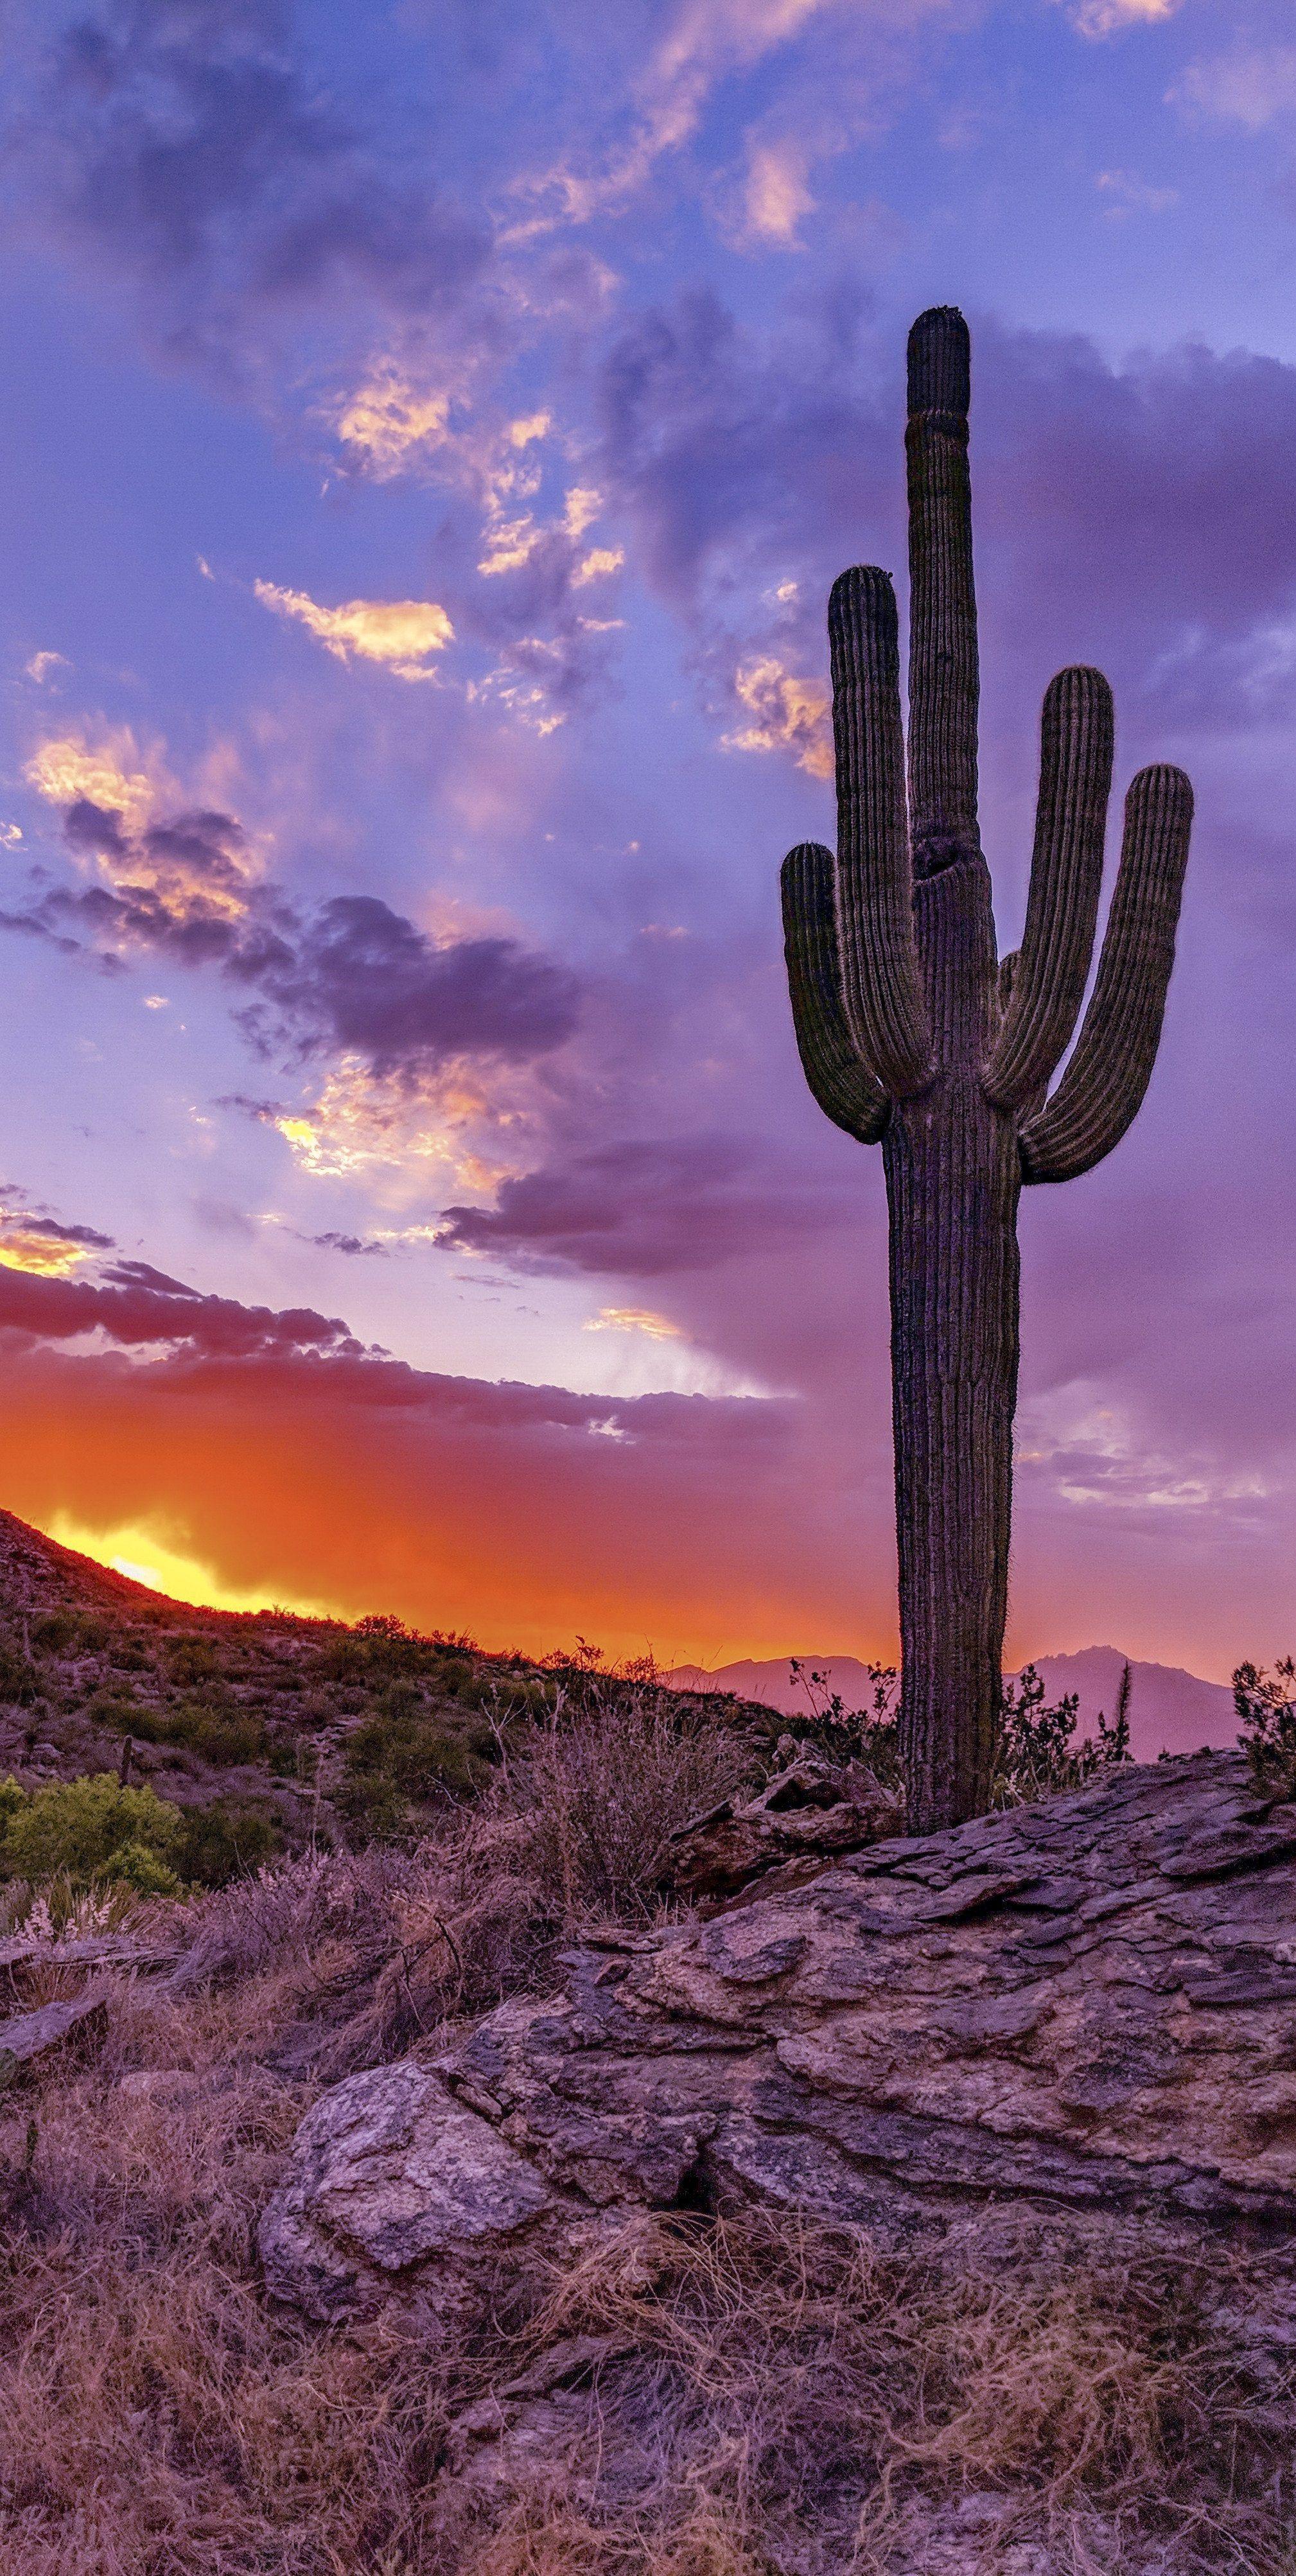 Desert Cactus Sunset Wallpapers - Top Free Desert Cactus Sunset ...